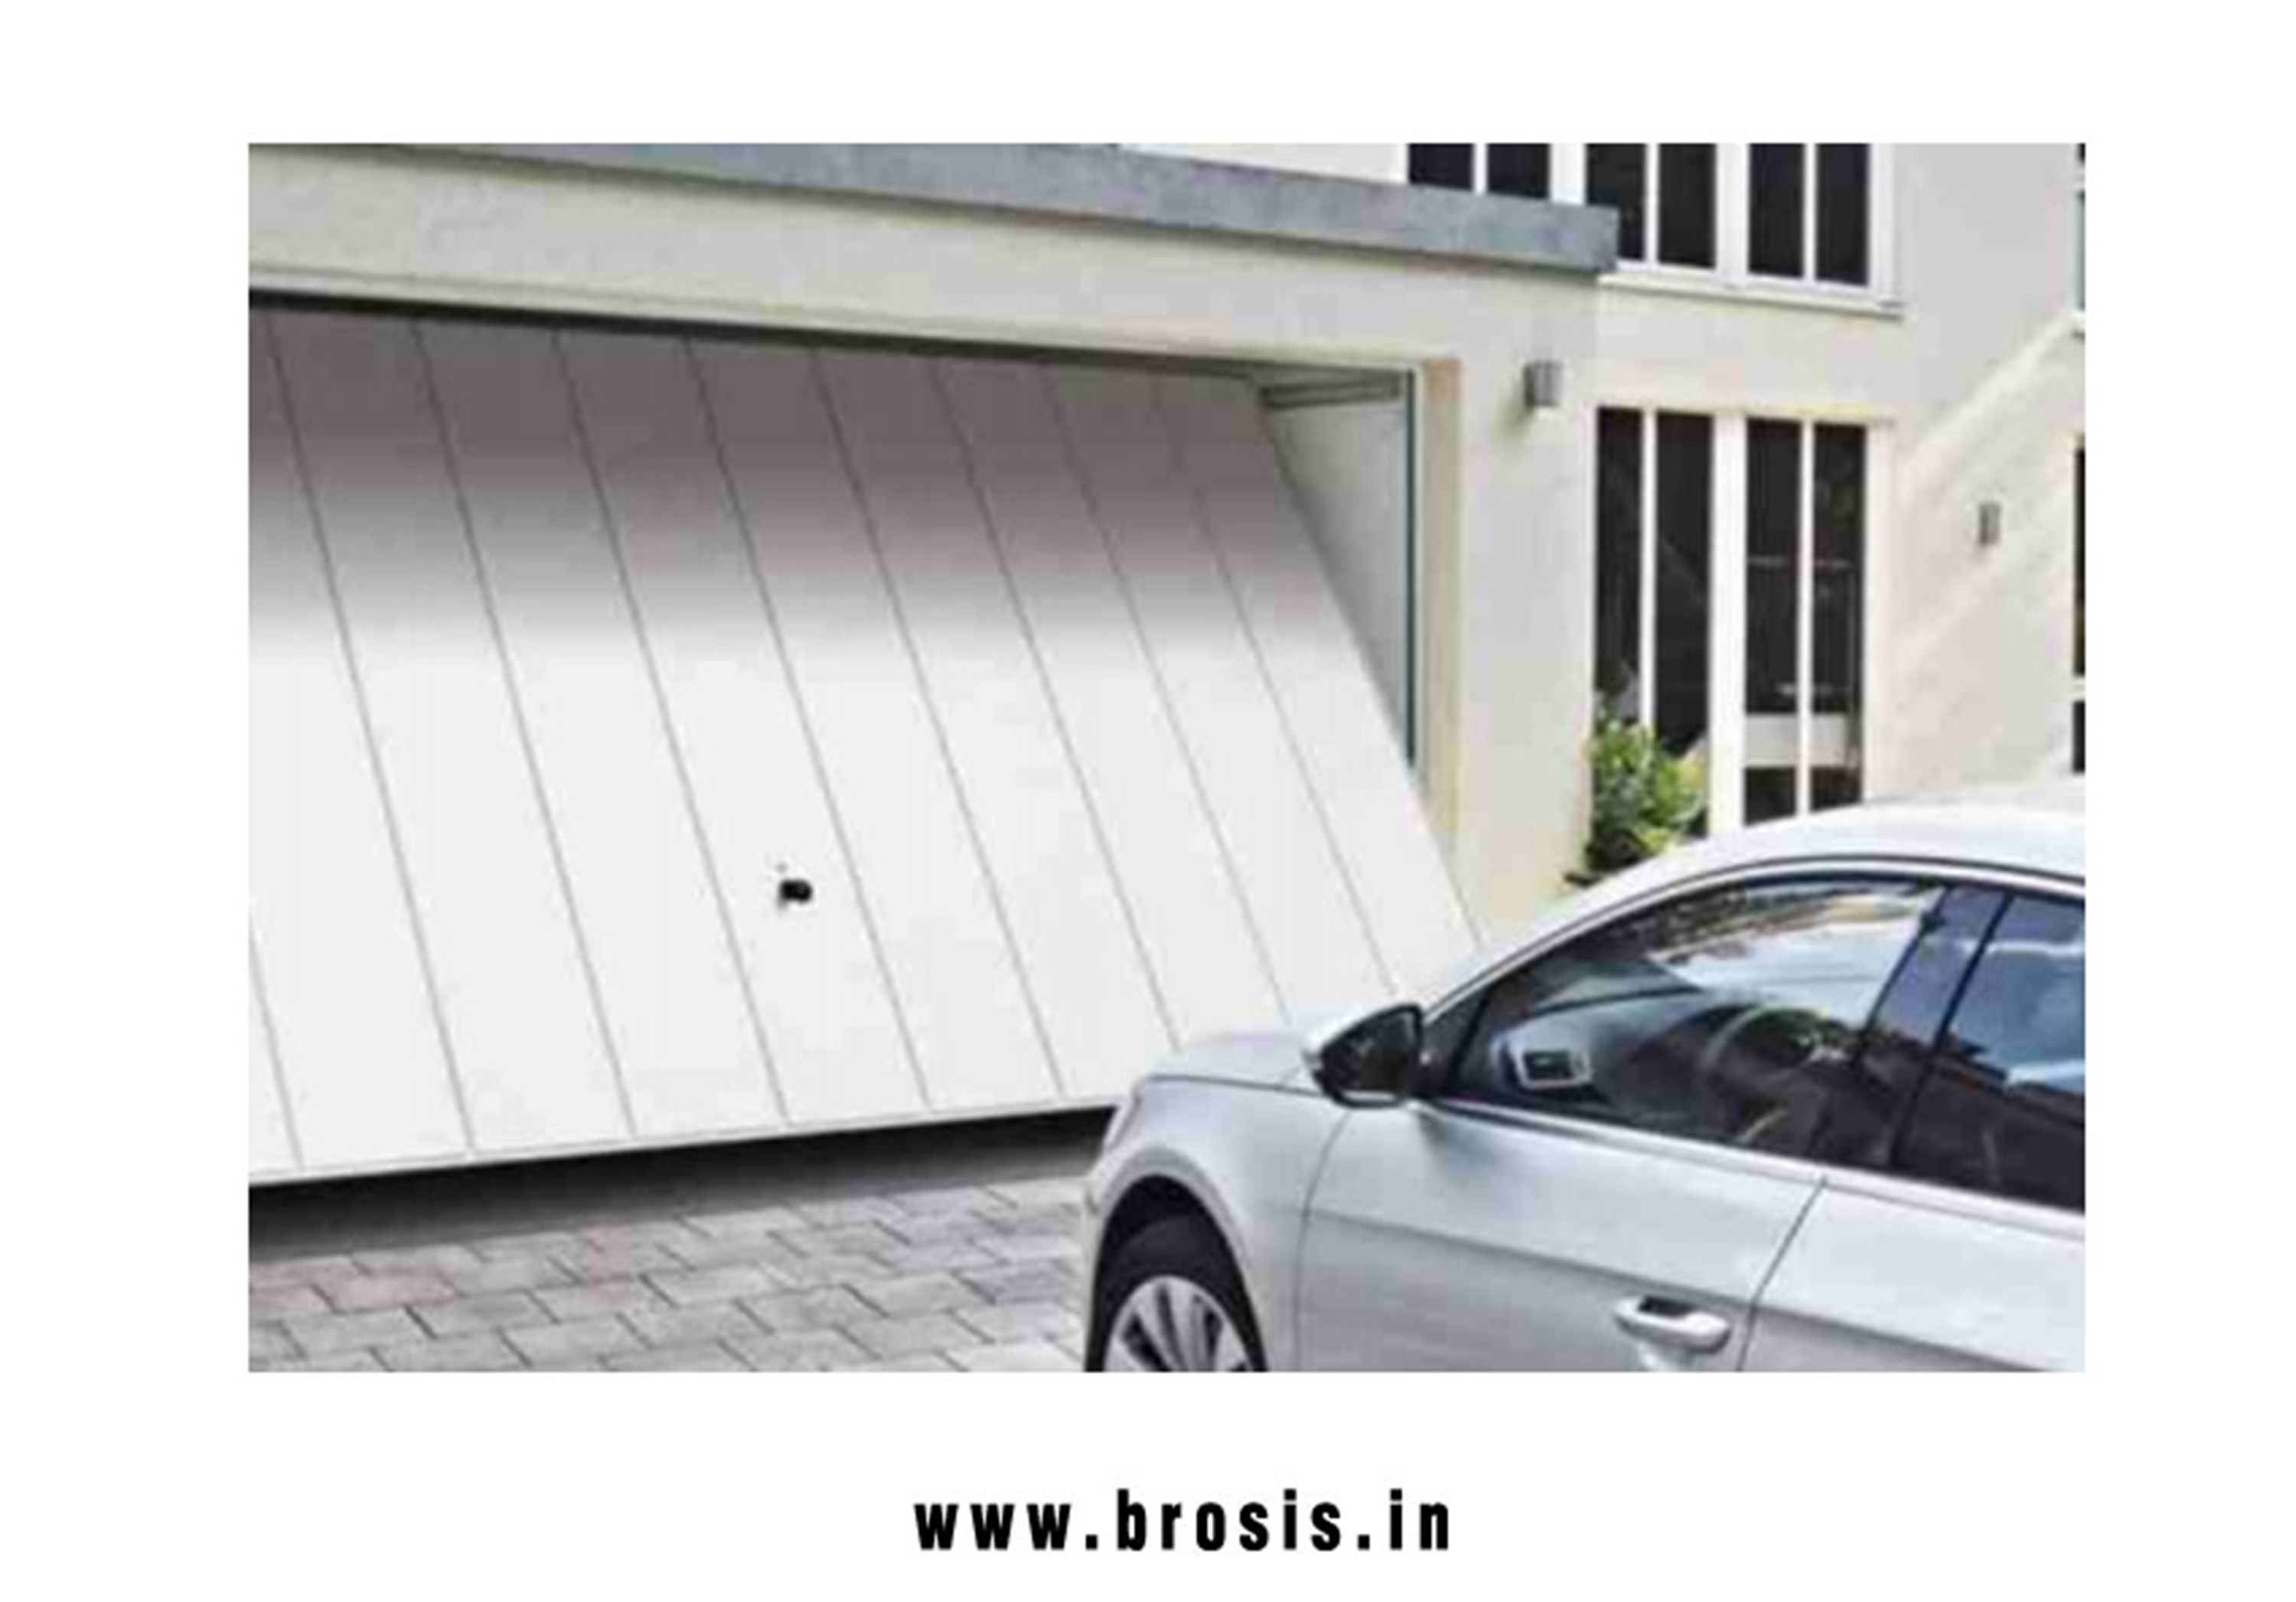 Garage Doors manufacturers exporters in India Punjab Ludhiana